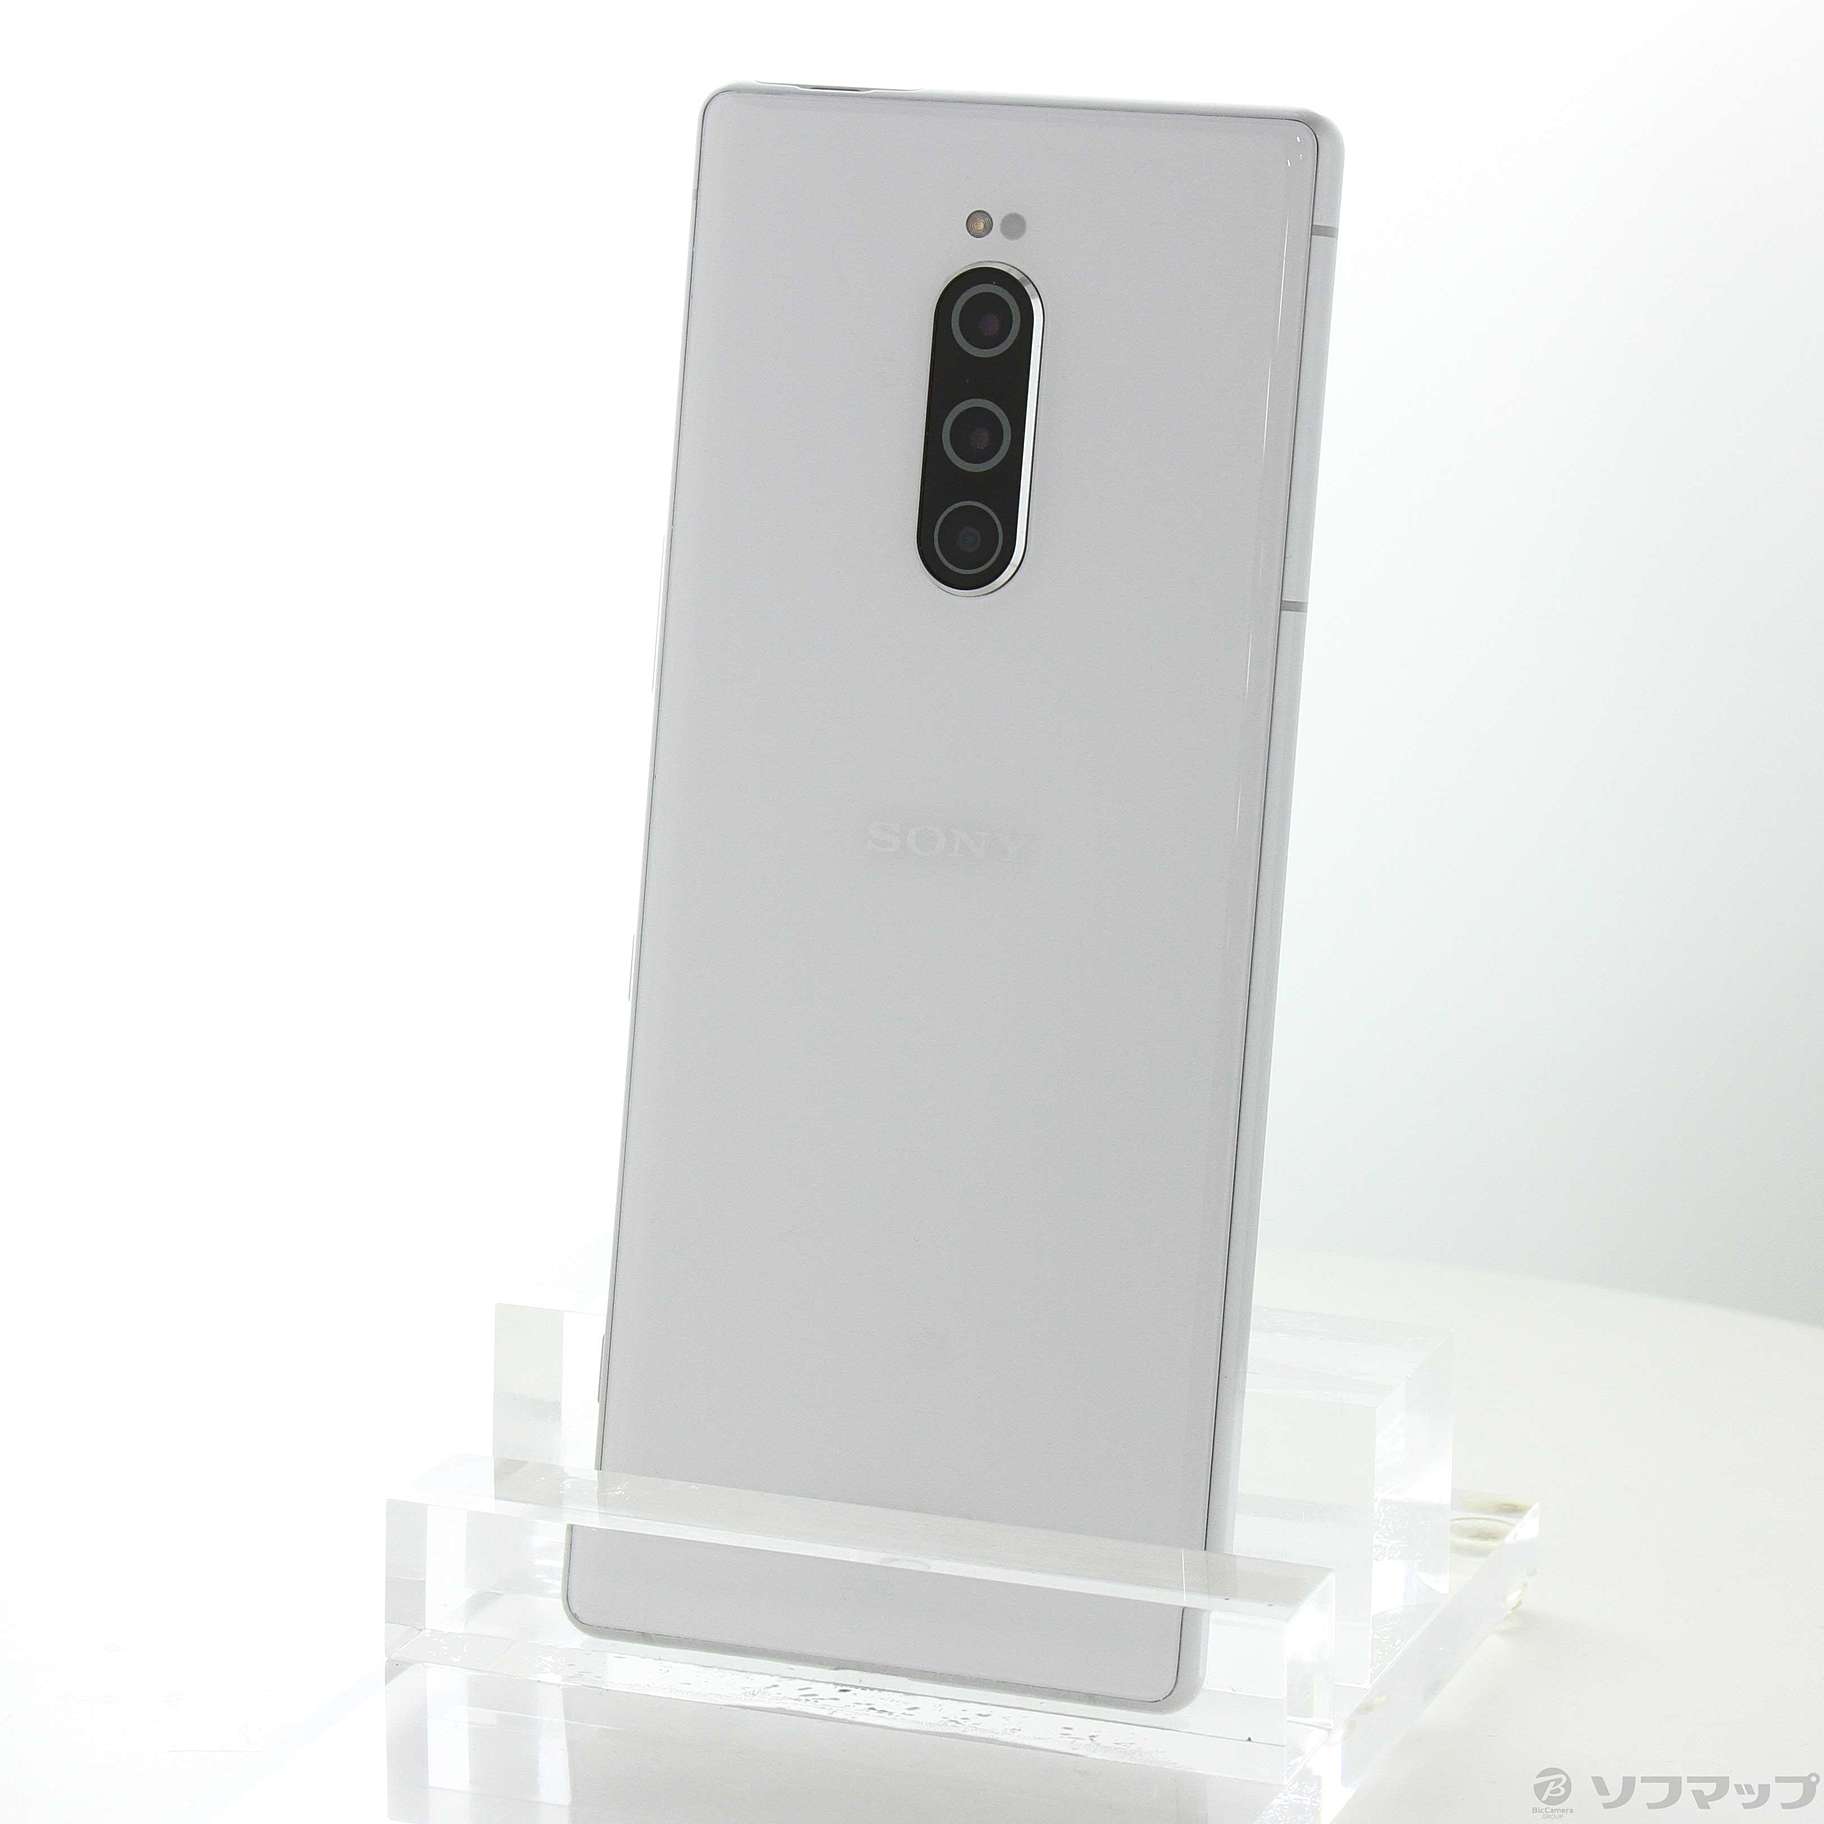 Xperia 1 White 64 GB SIMフリー